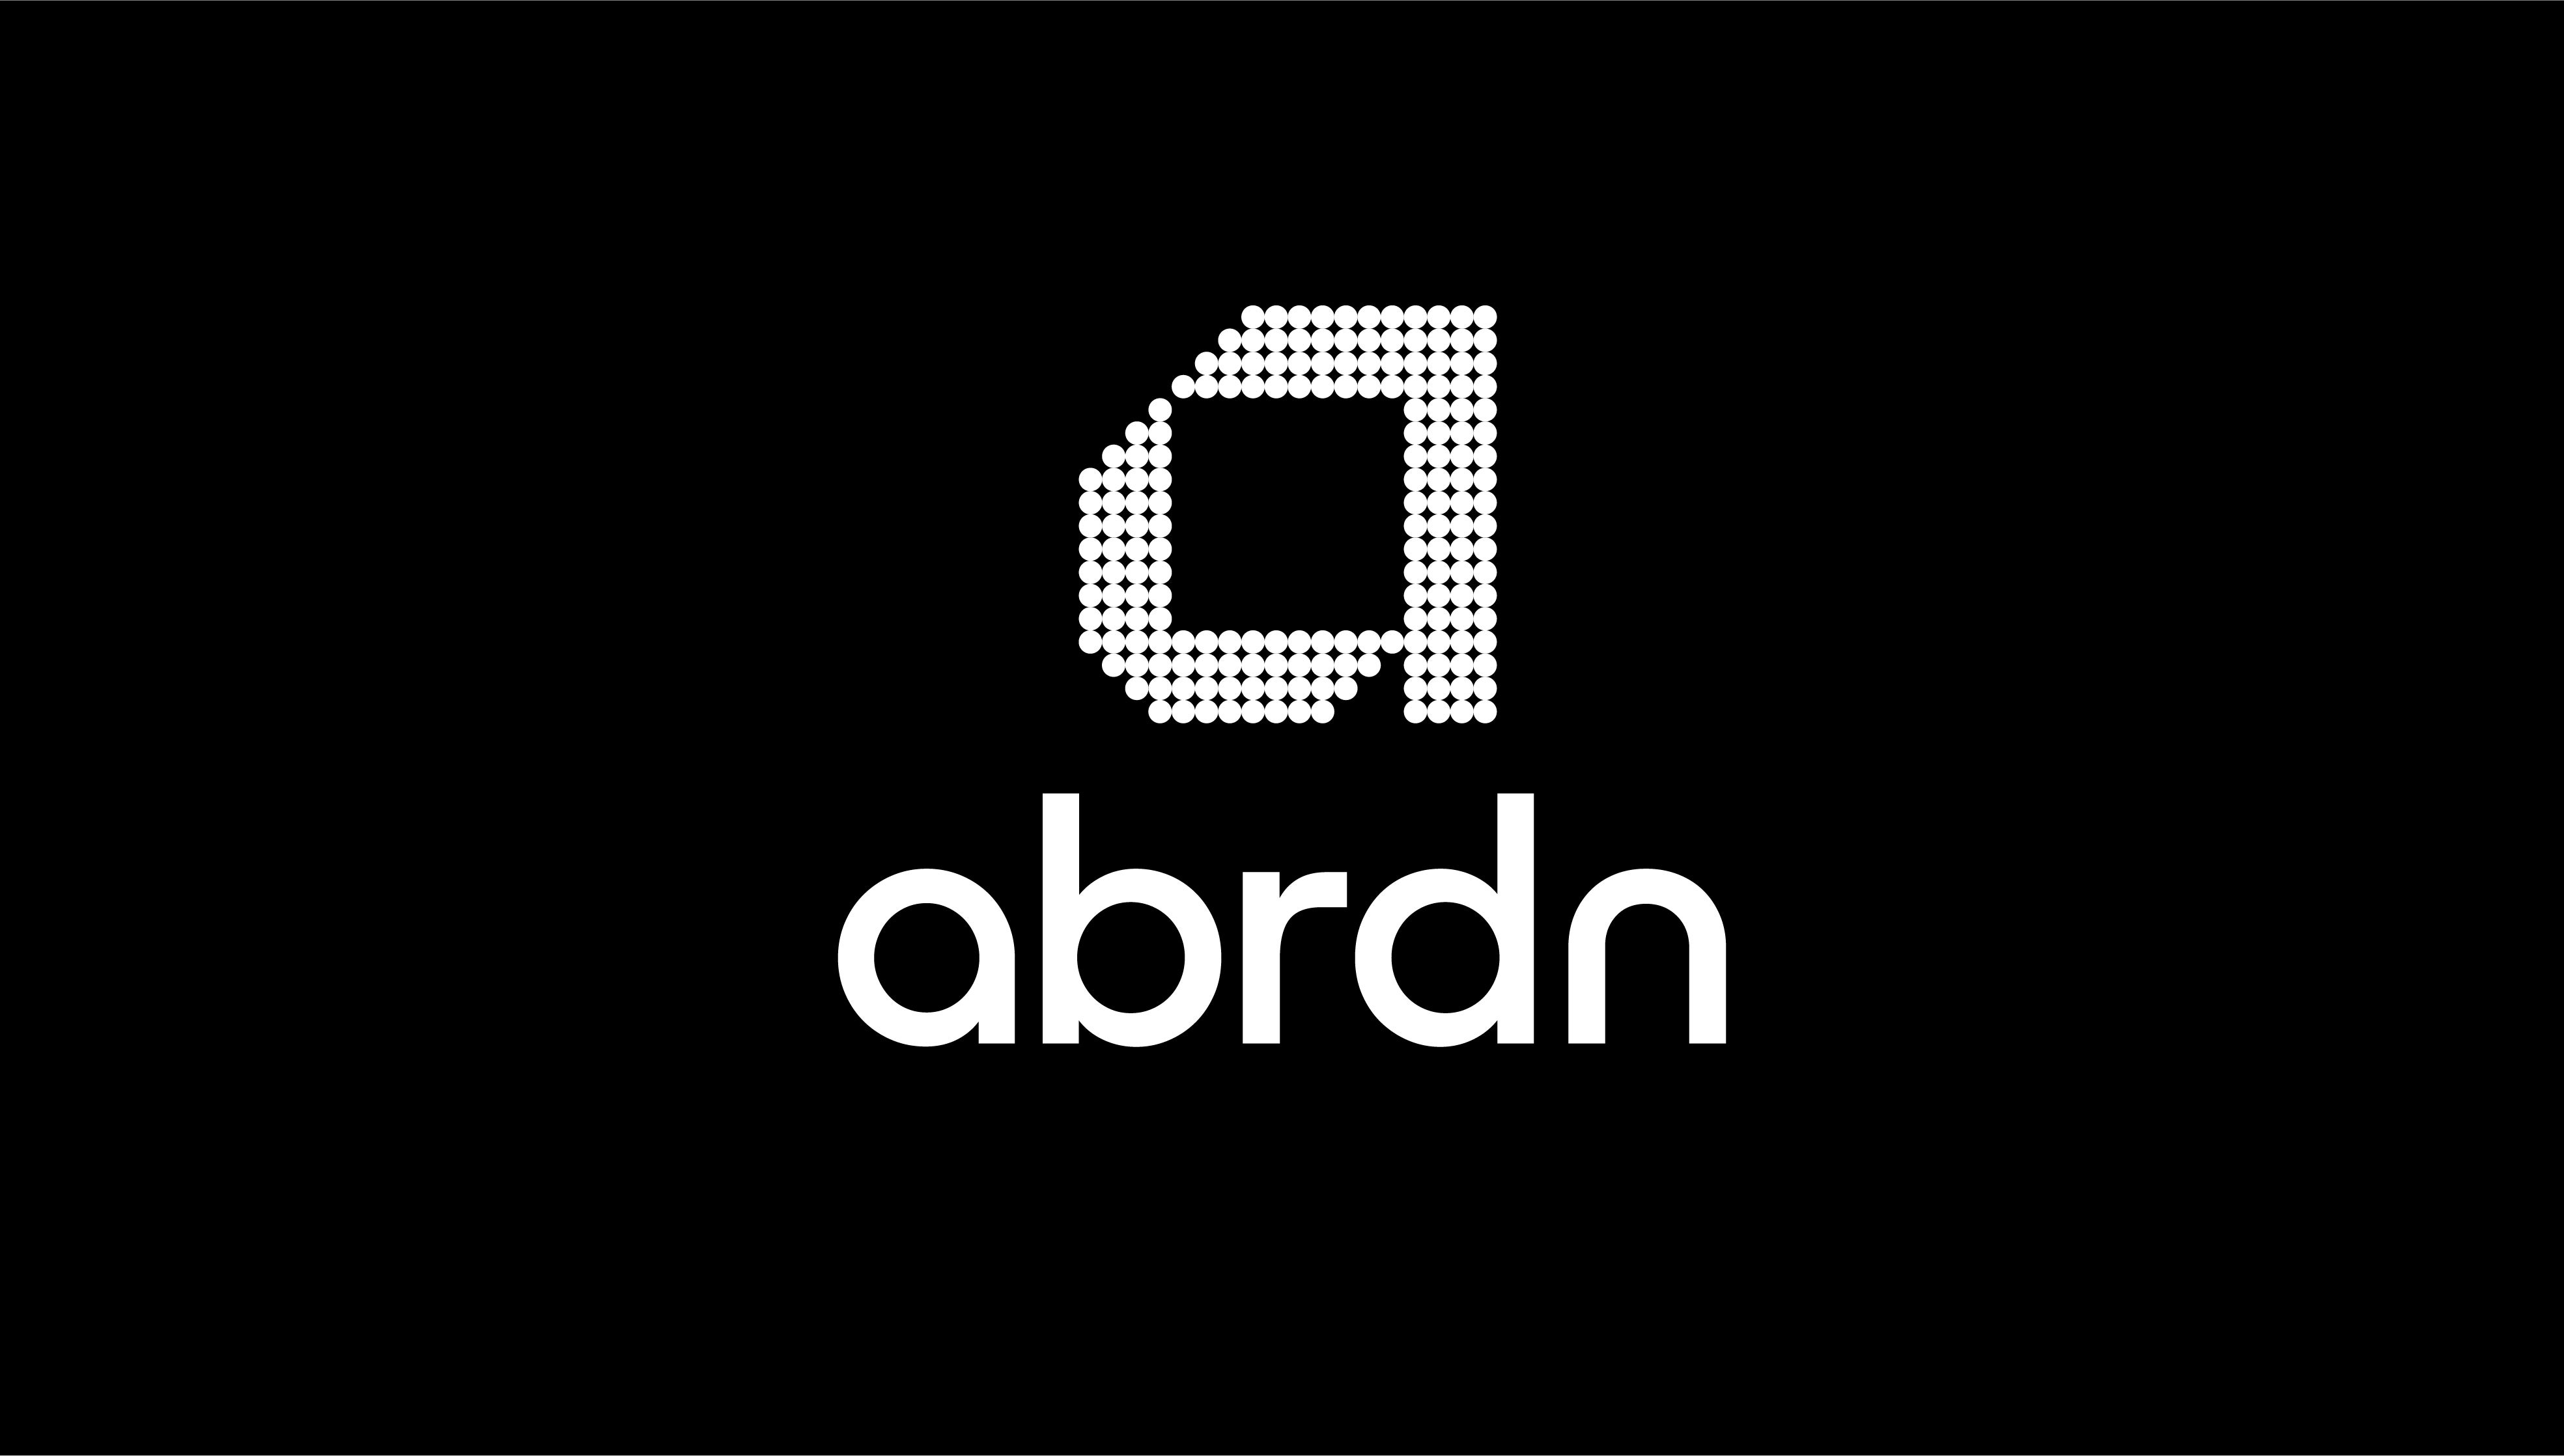 Standard Life Aberdeen has a new brand identity